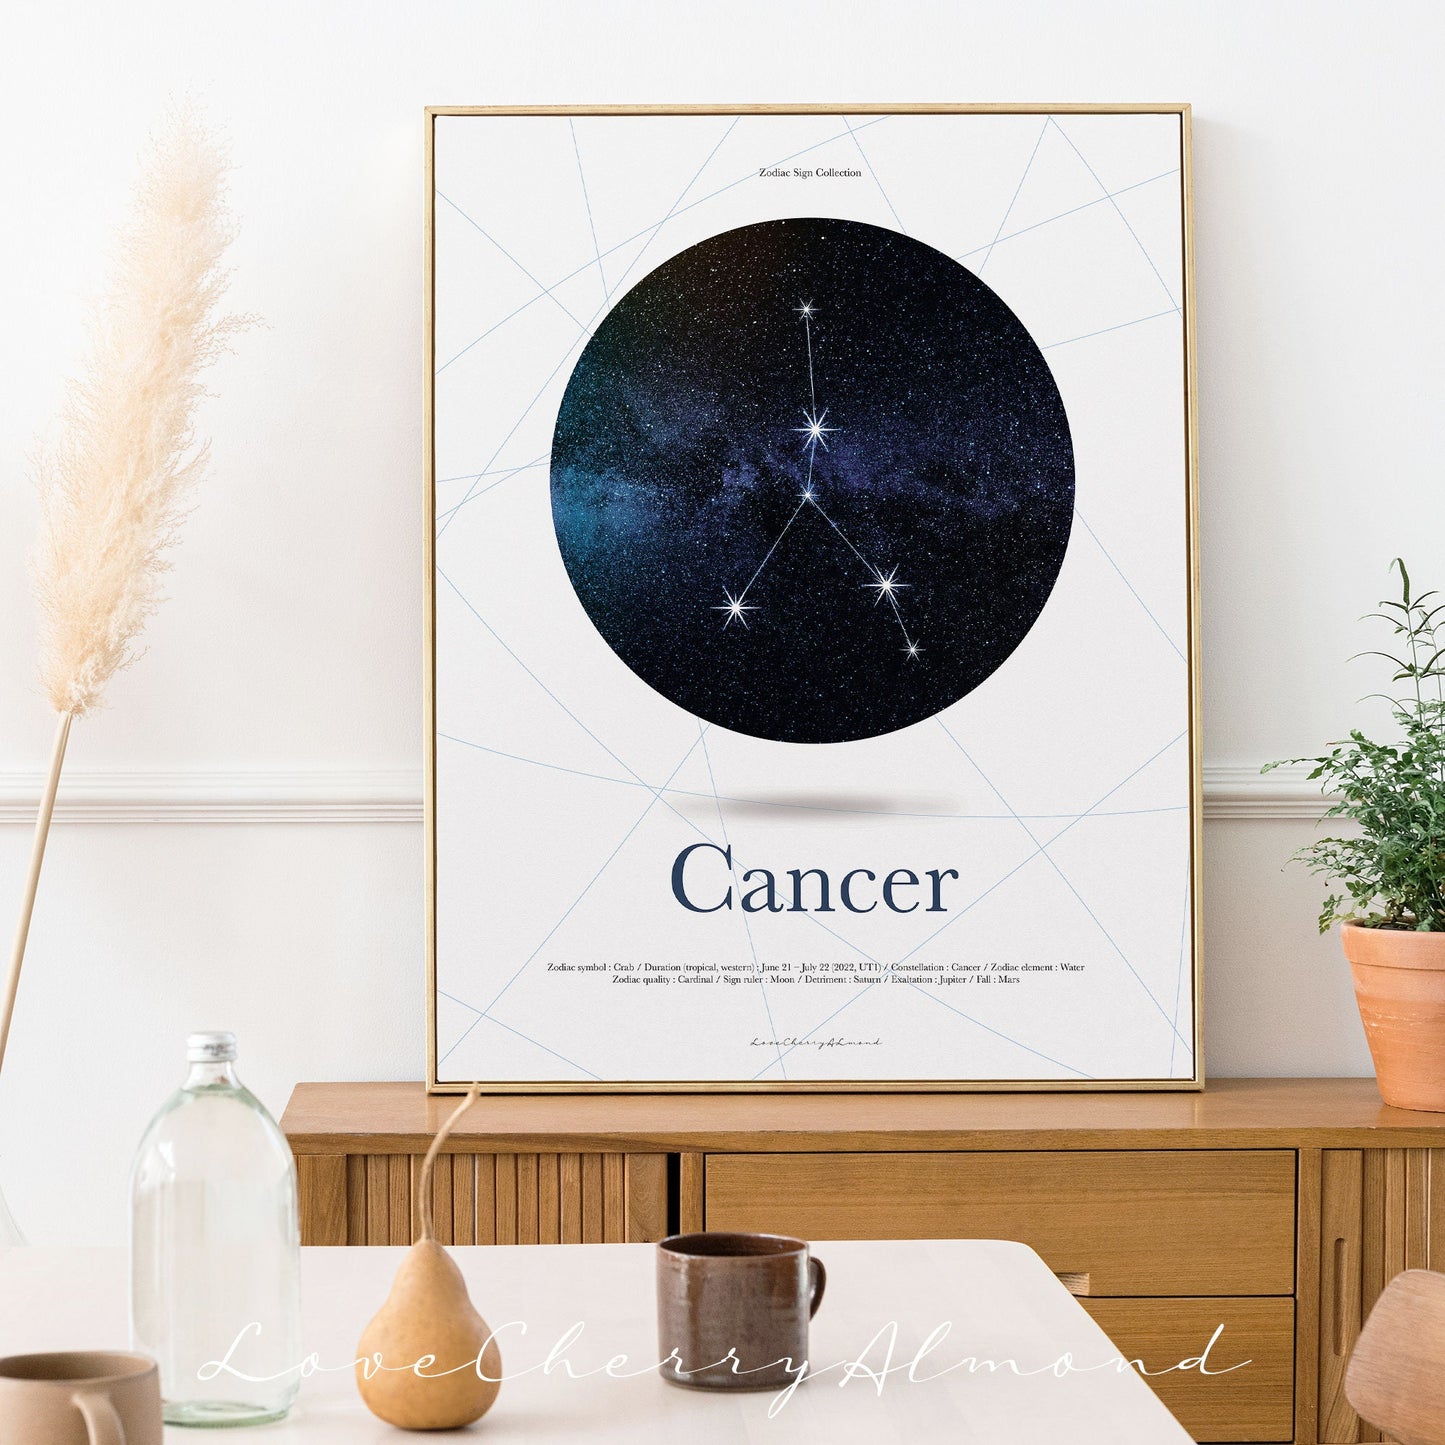 Zodiac Sign Collection "Cancer"